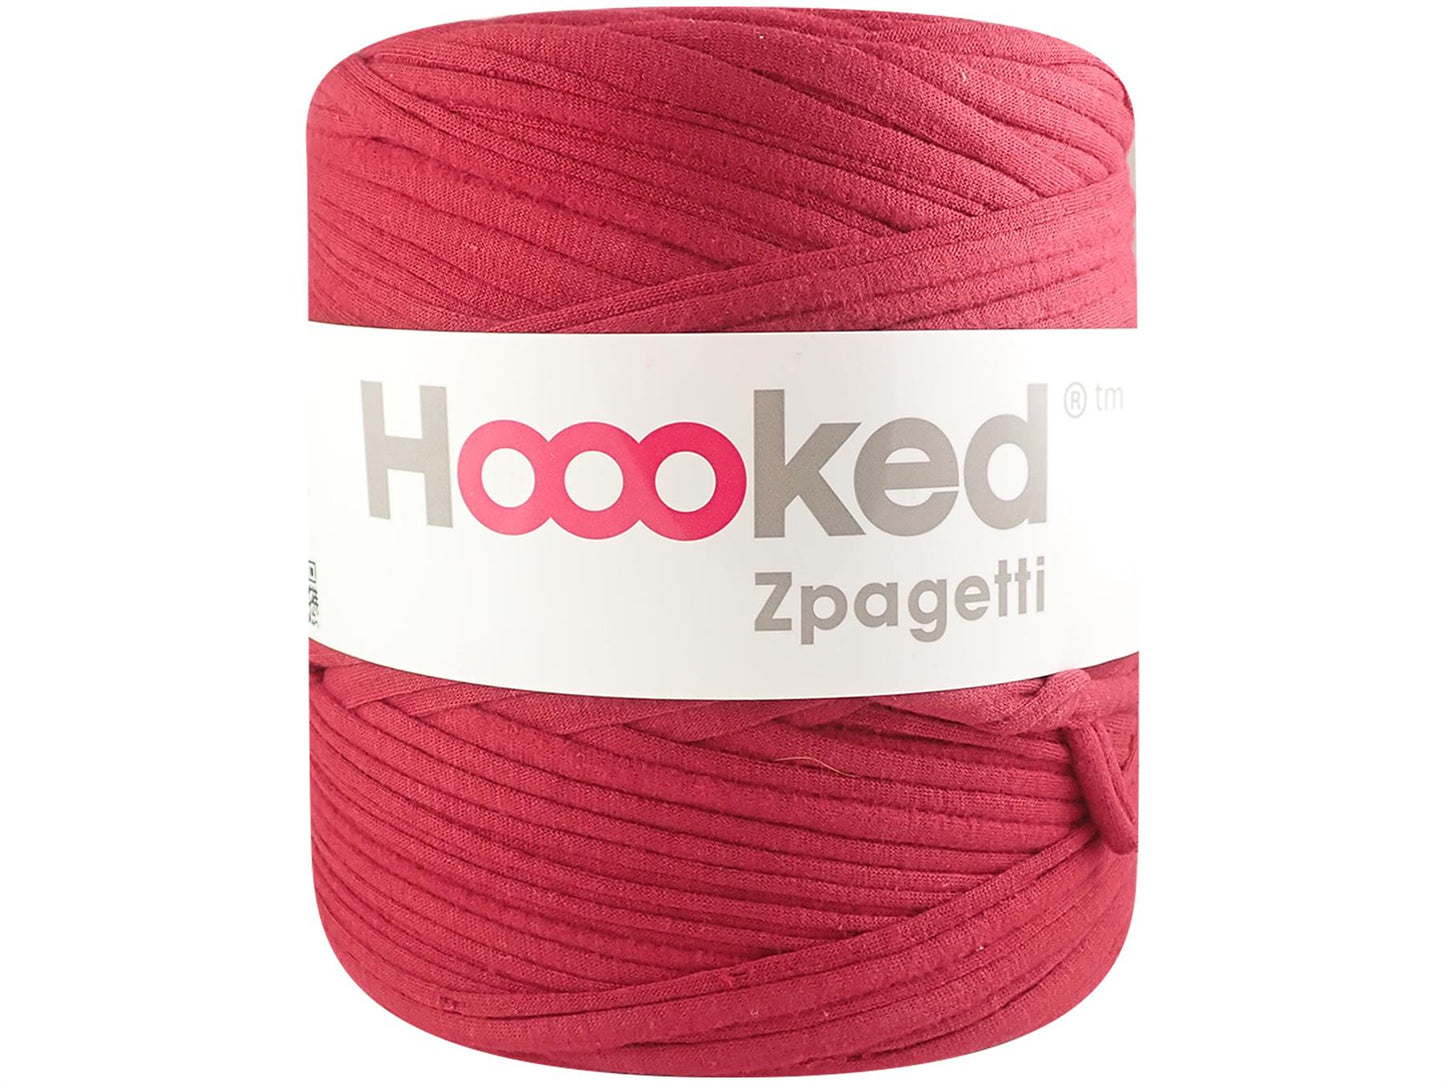 [Hoooked] Zpagetti Burgundy Red Cotton T-Shirt Yarn - 120M, 700g